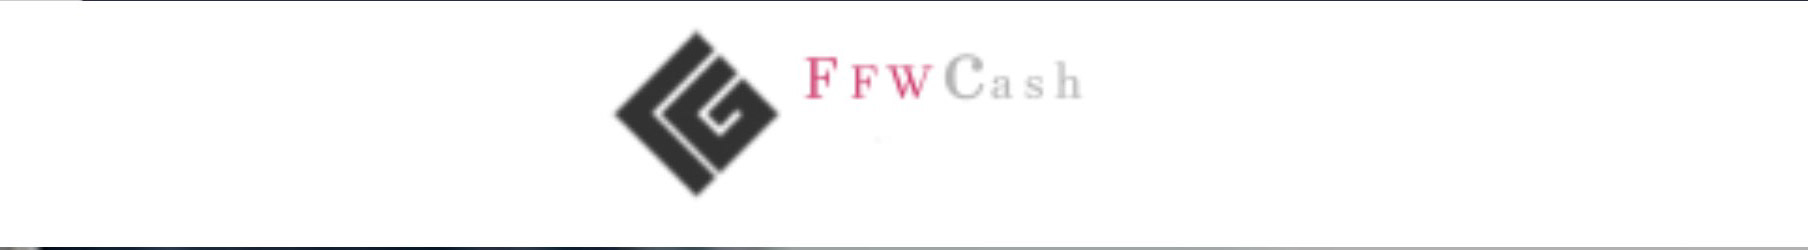 Ffwcash CO's profile banner